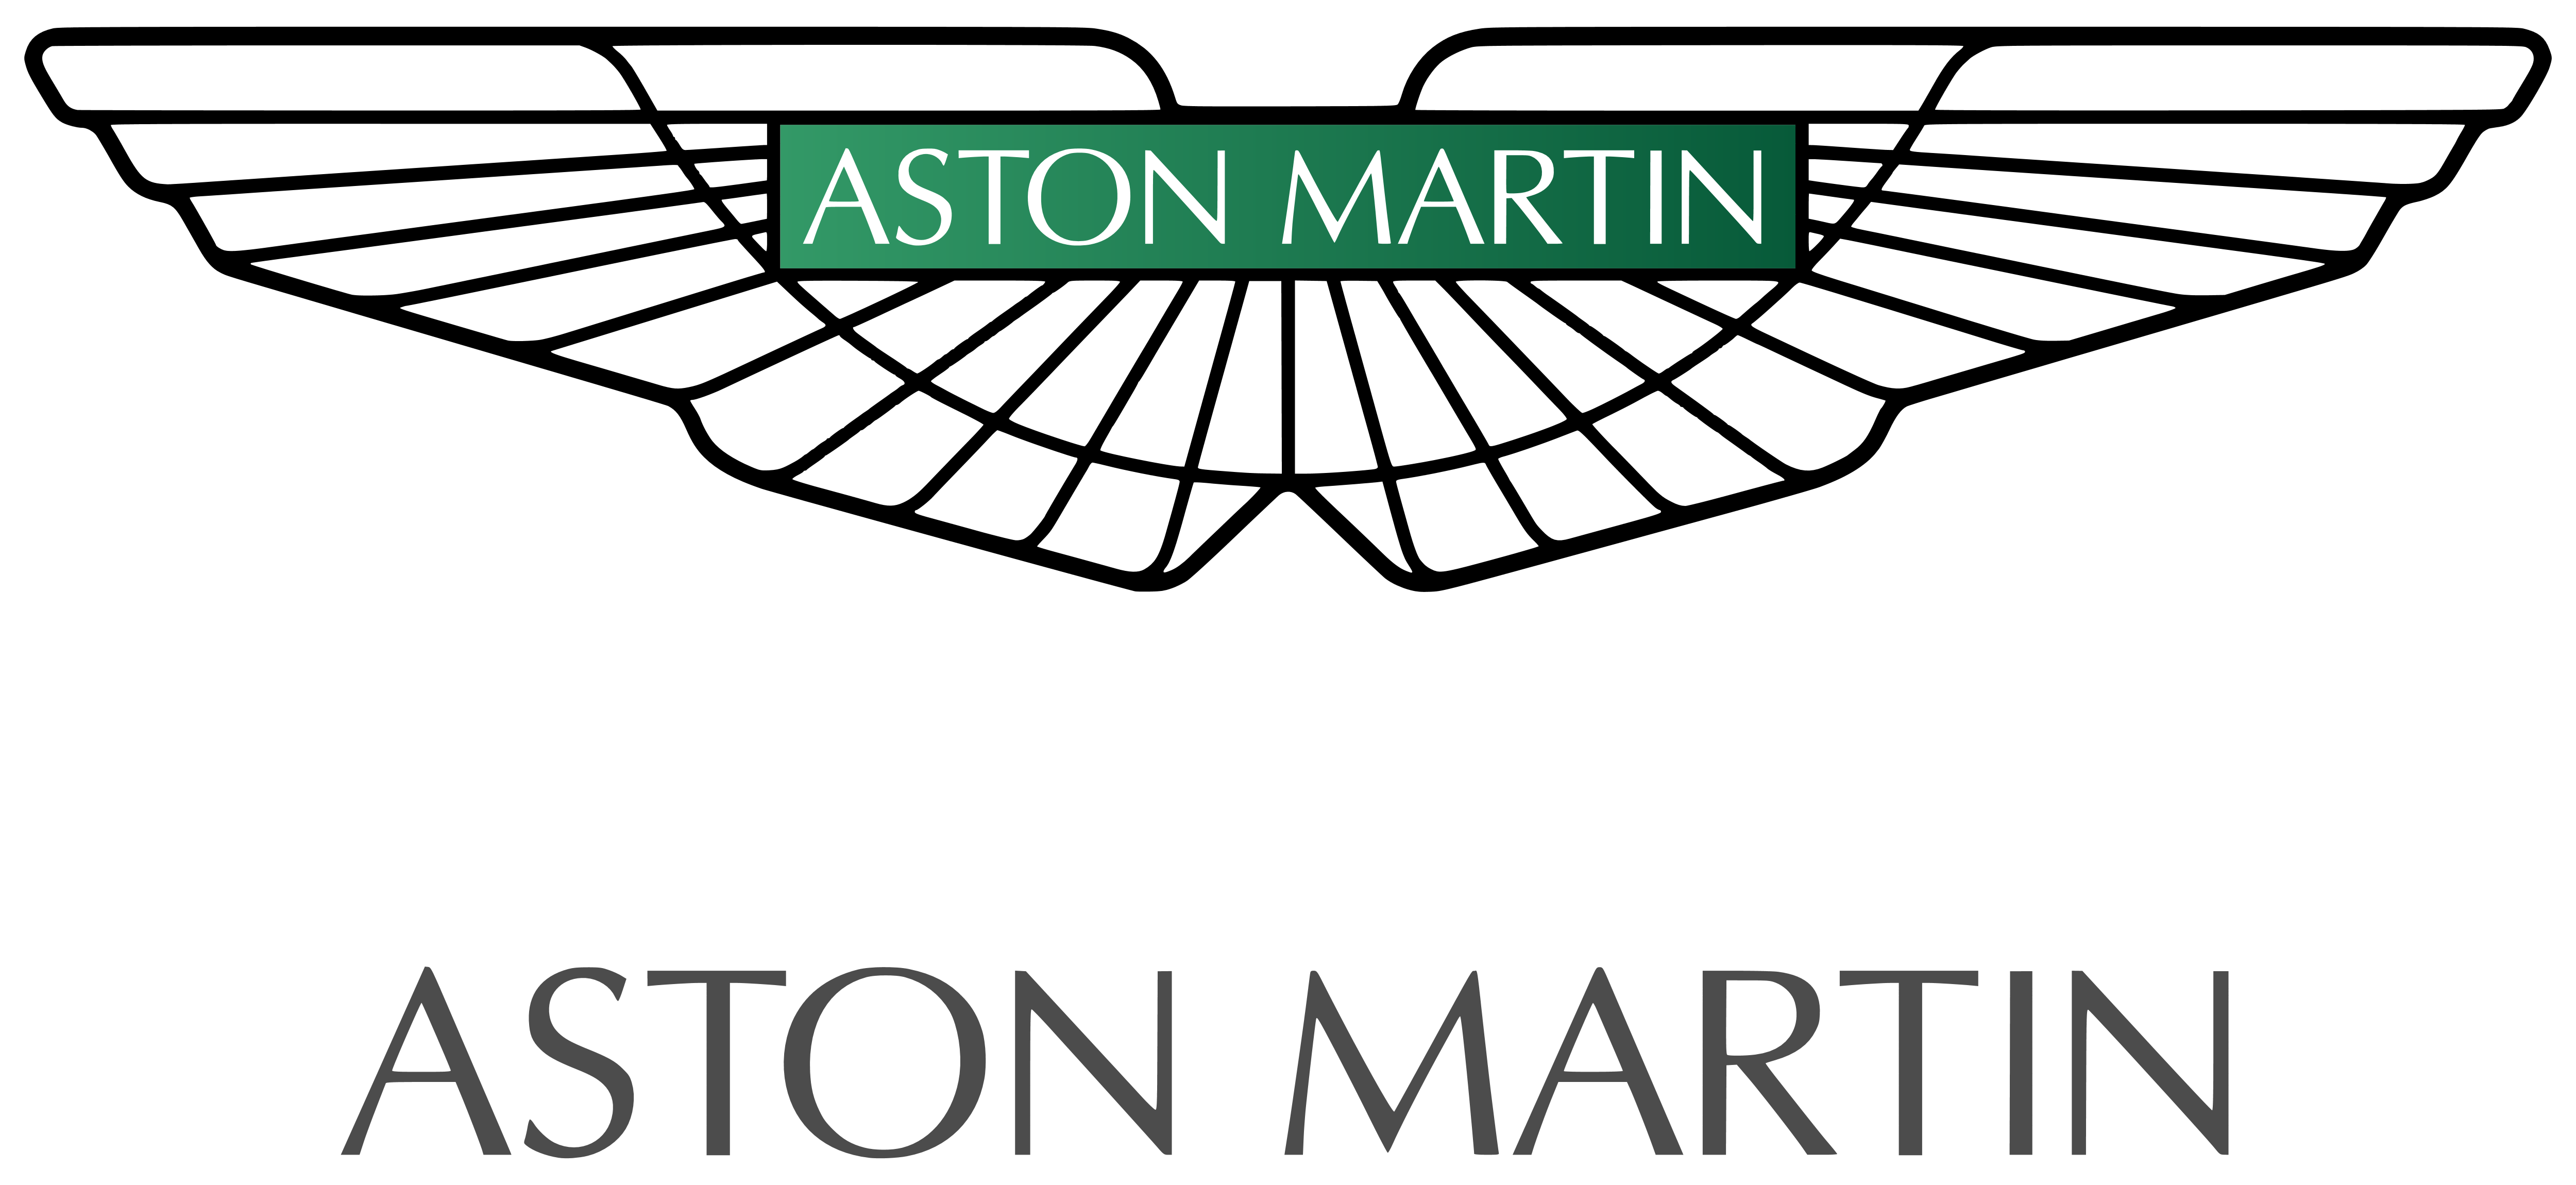 Aston Martin History - Wings 